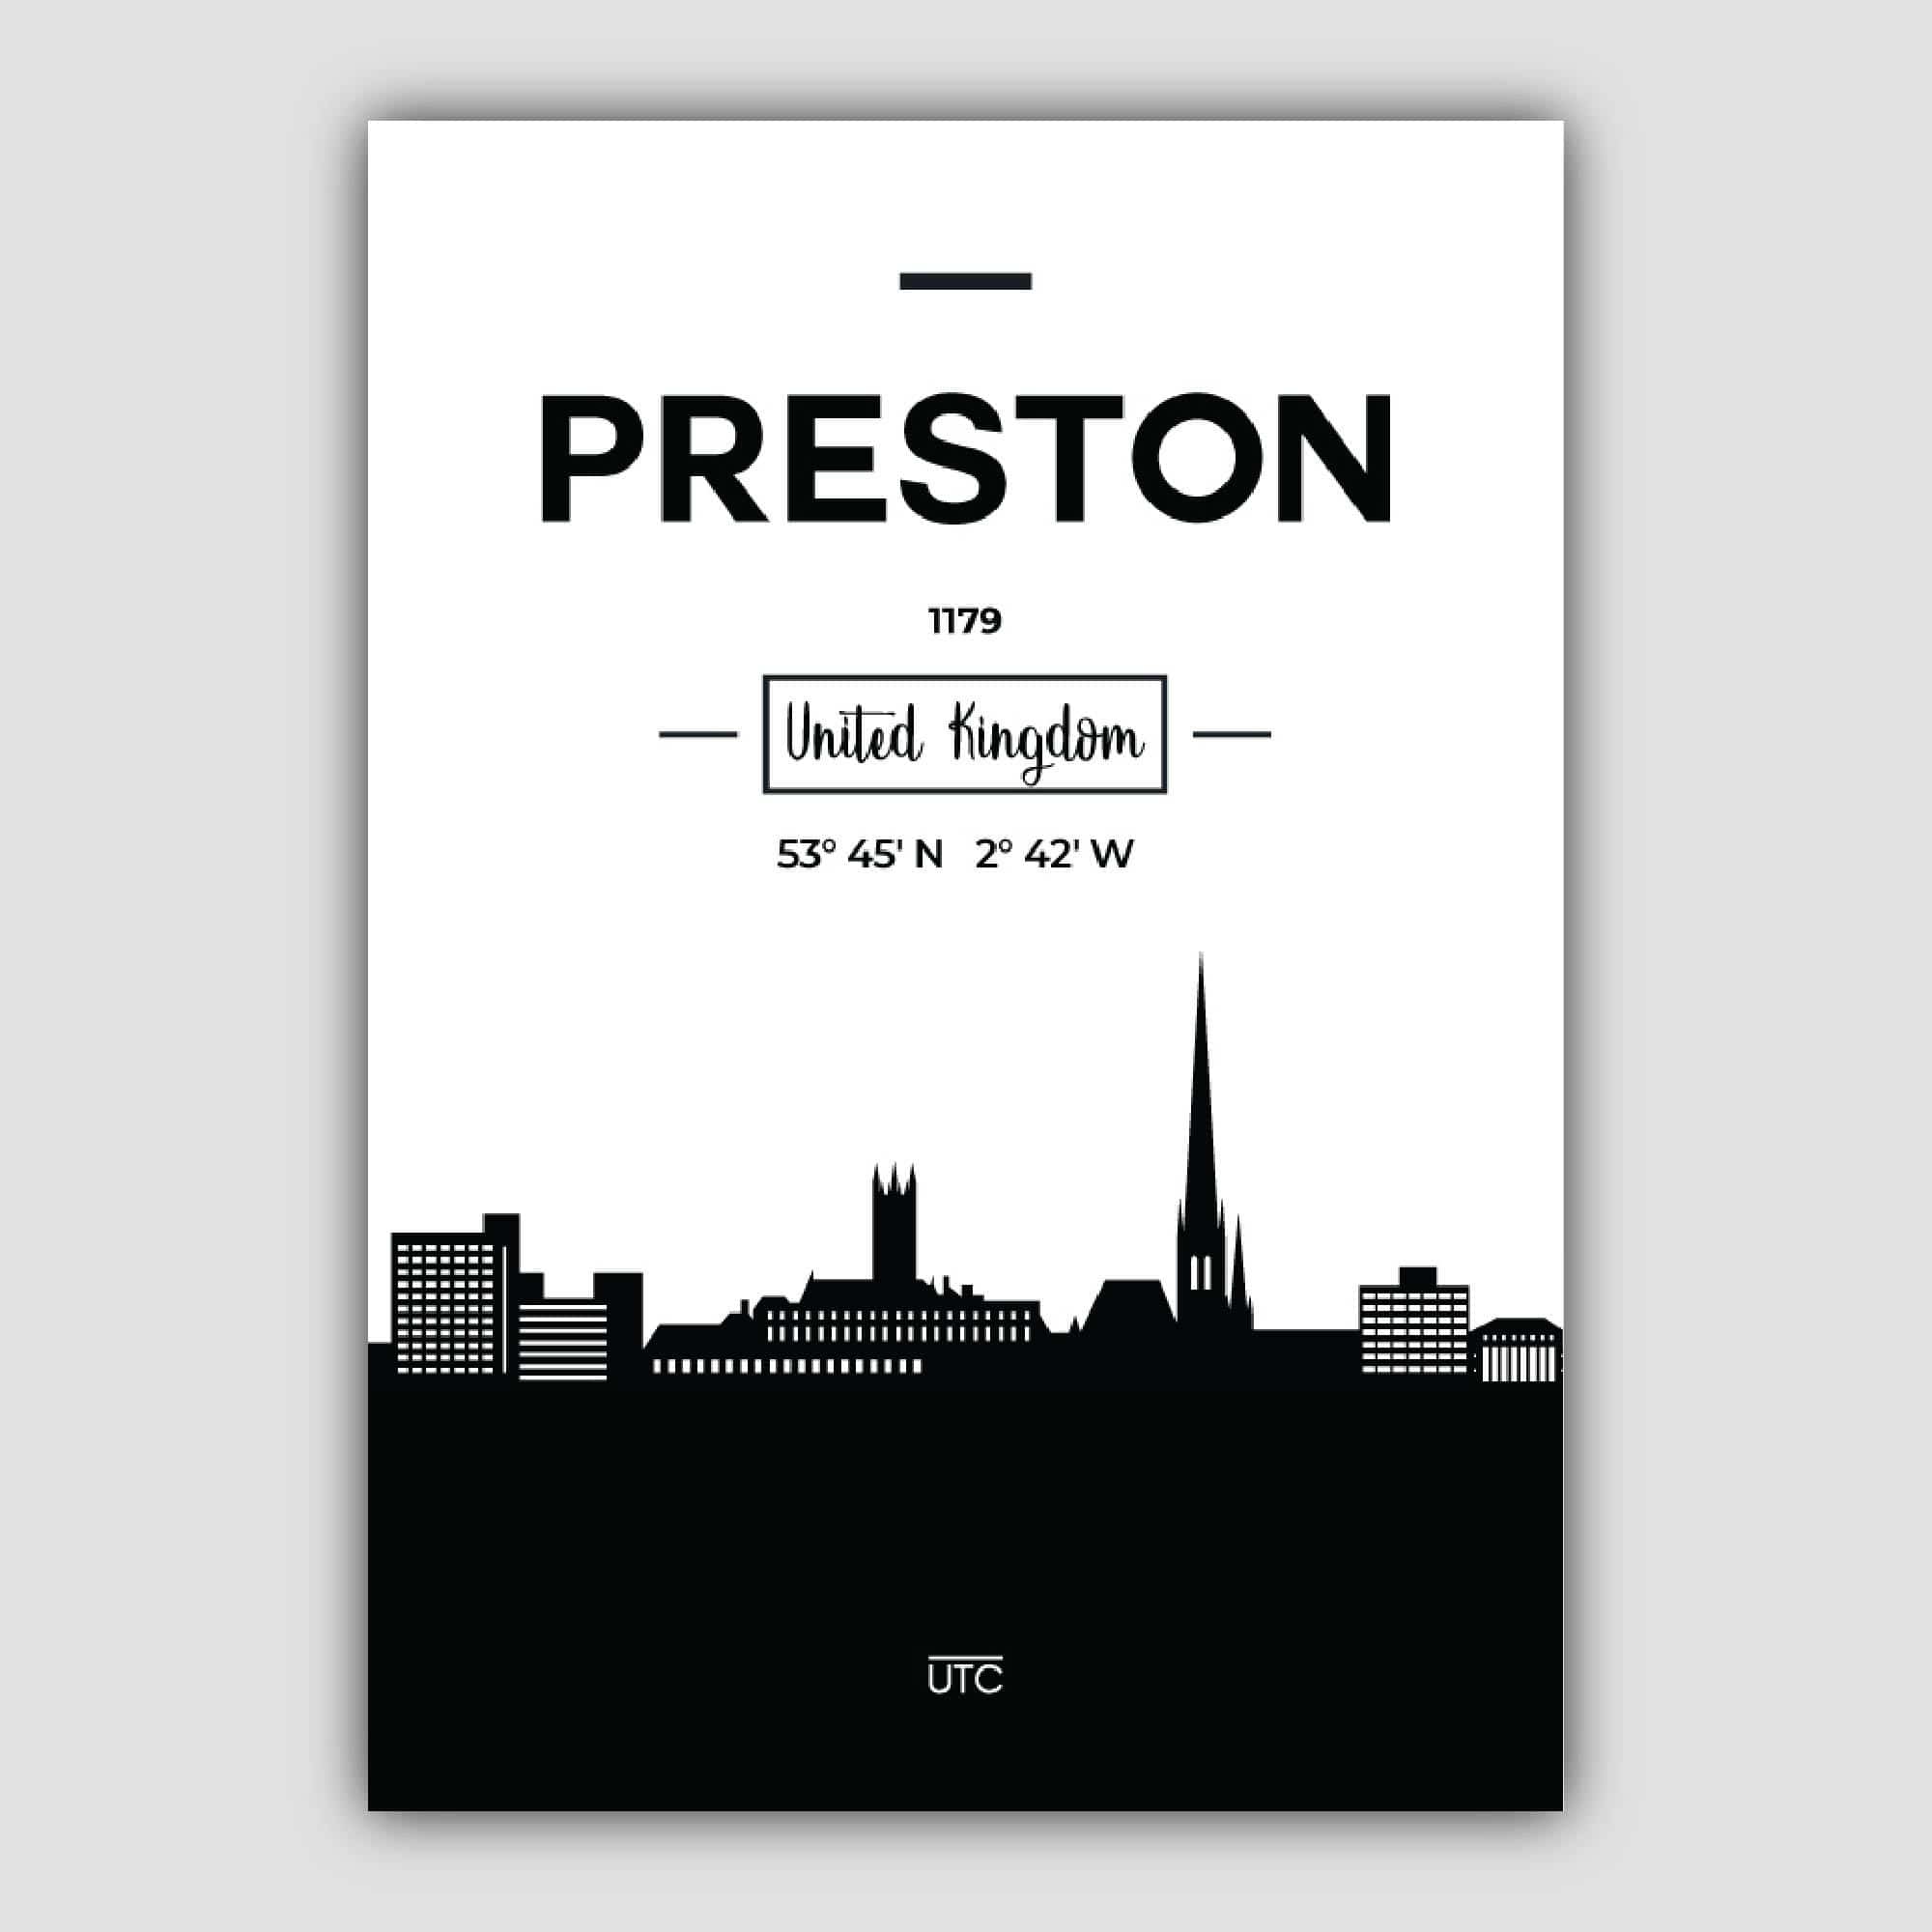 Preston City Skyline Cityscape Print